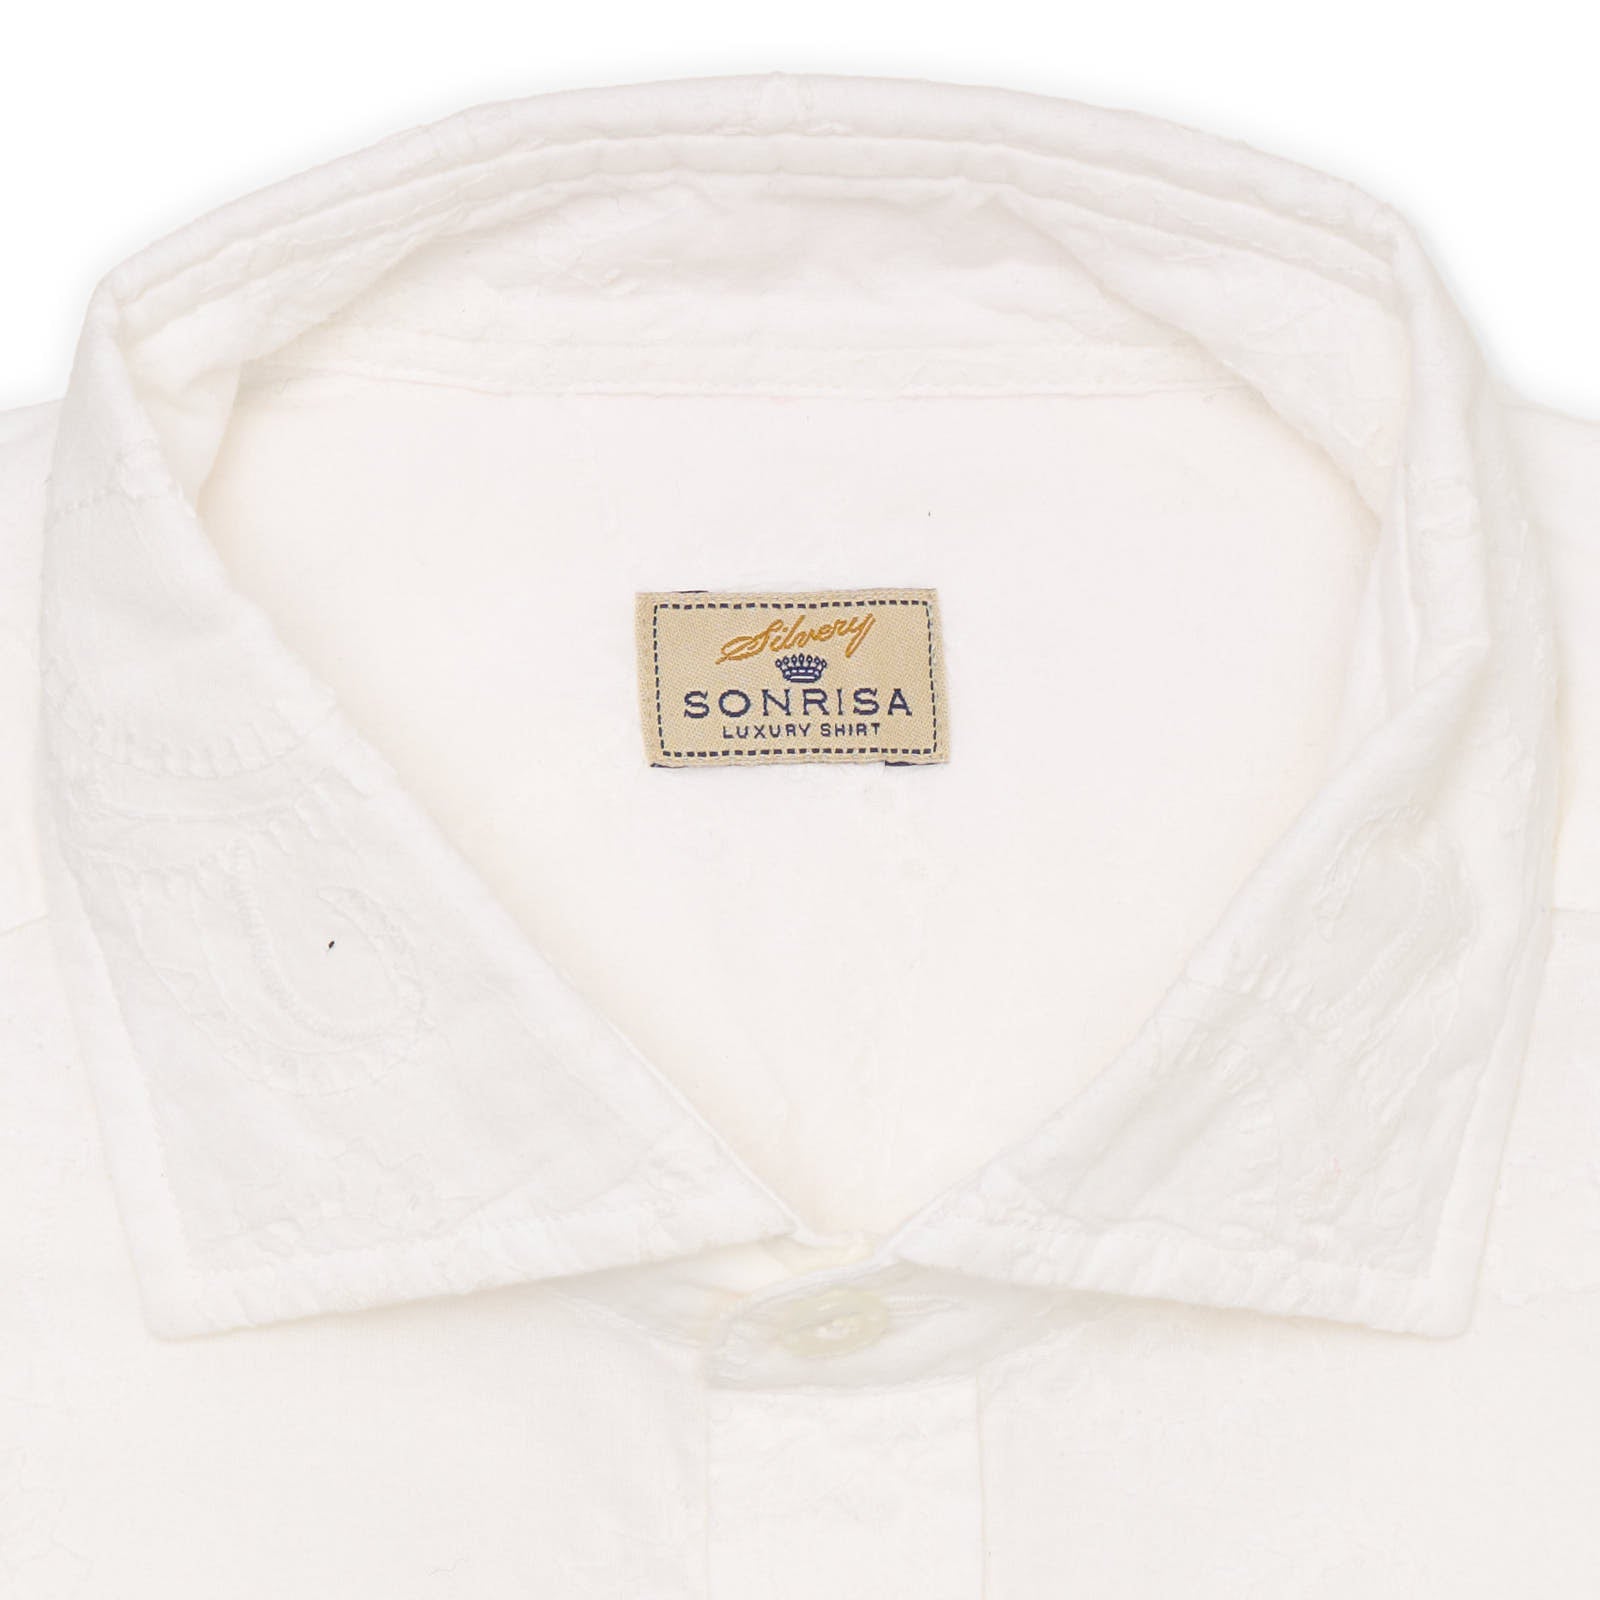 SONRISA White Cotton Casual Shirt NEW